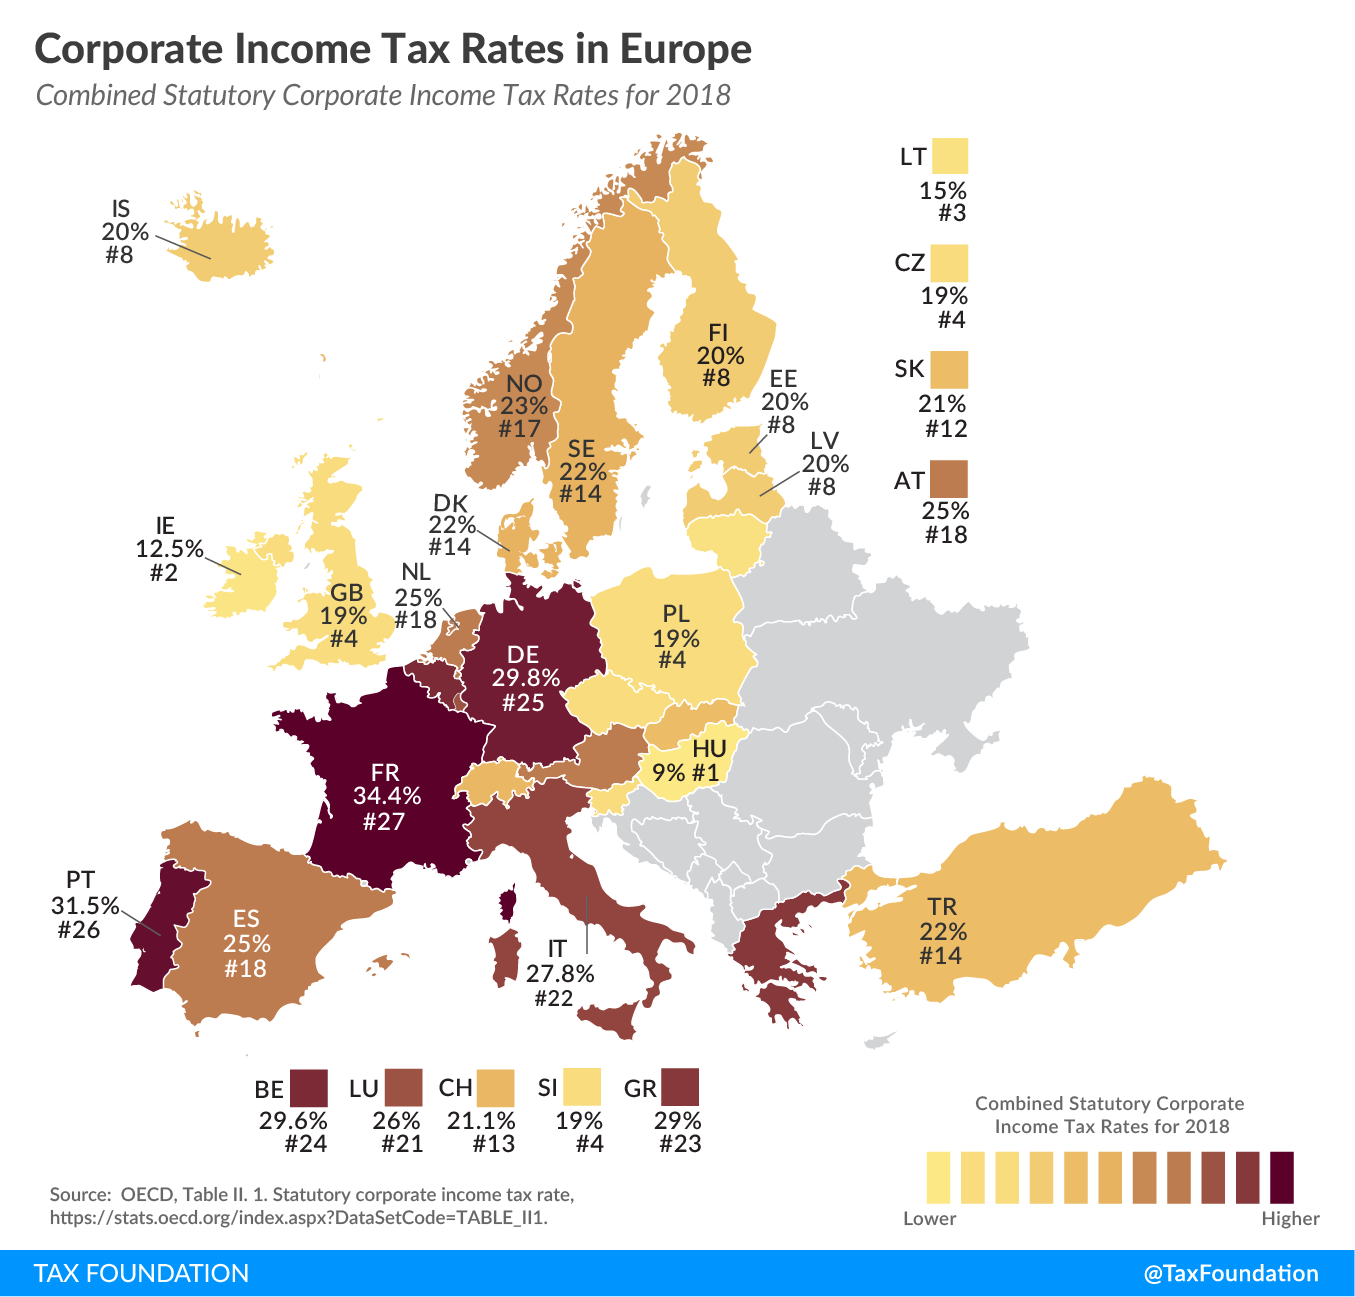 Corporate Income Tax Rates Europe, European Corporate Tax Rates, combined statutory corporate income tax rates Europe 2018